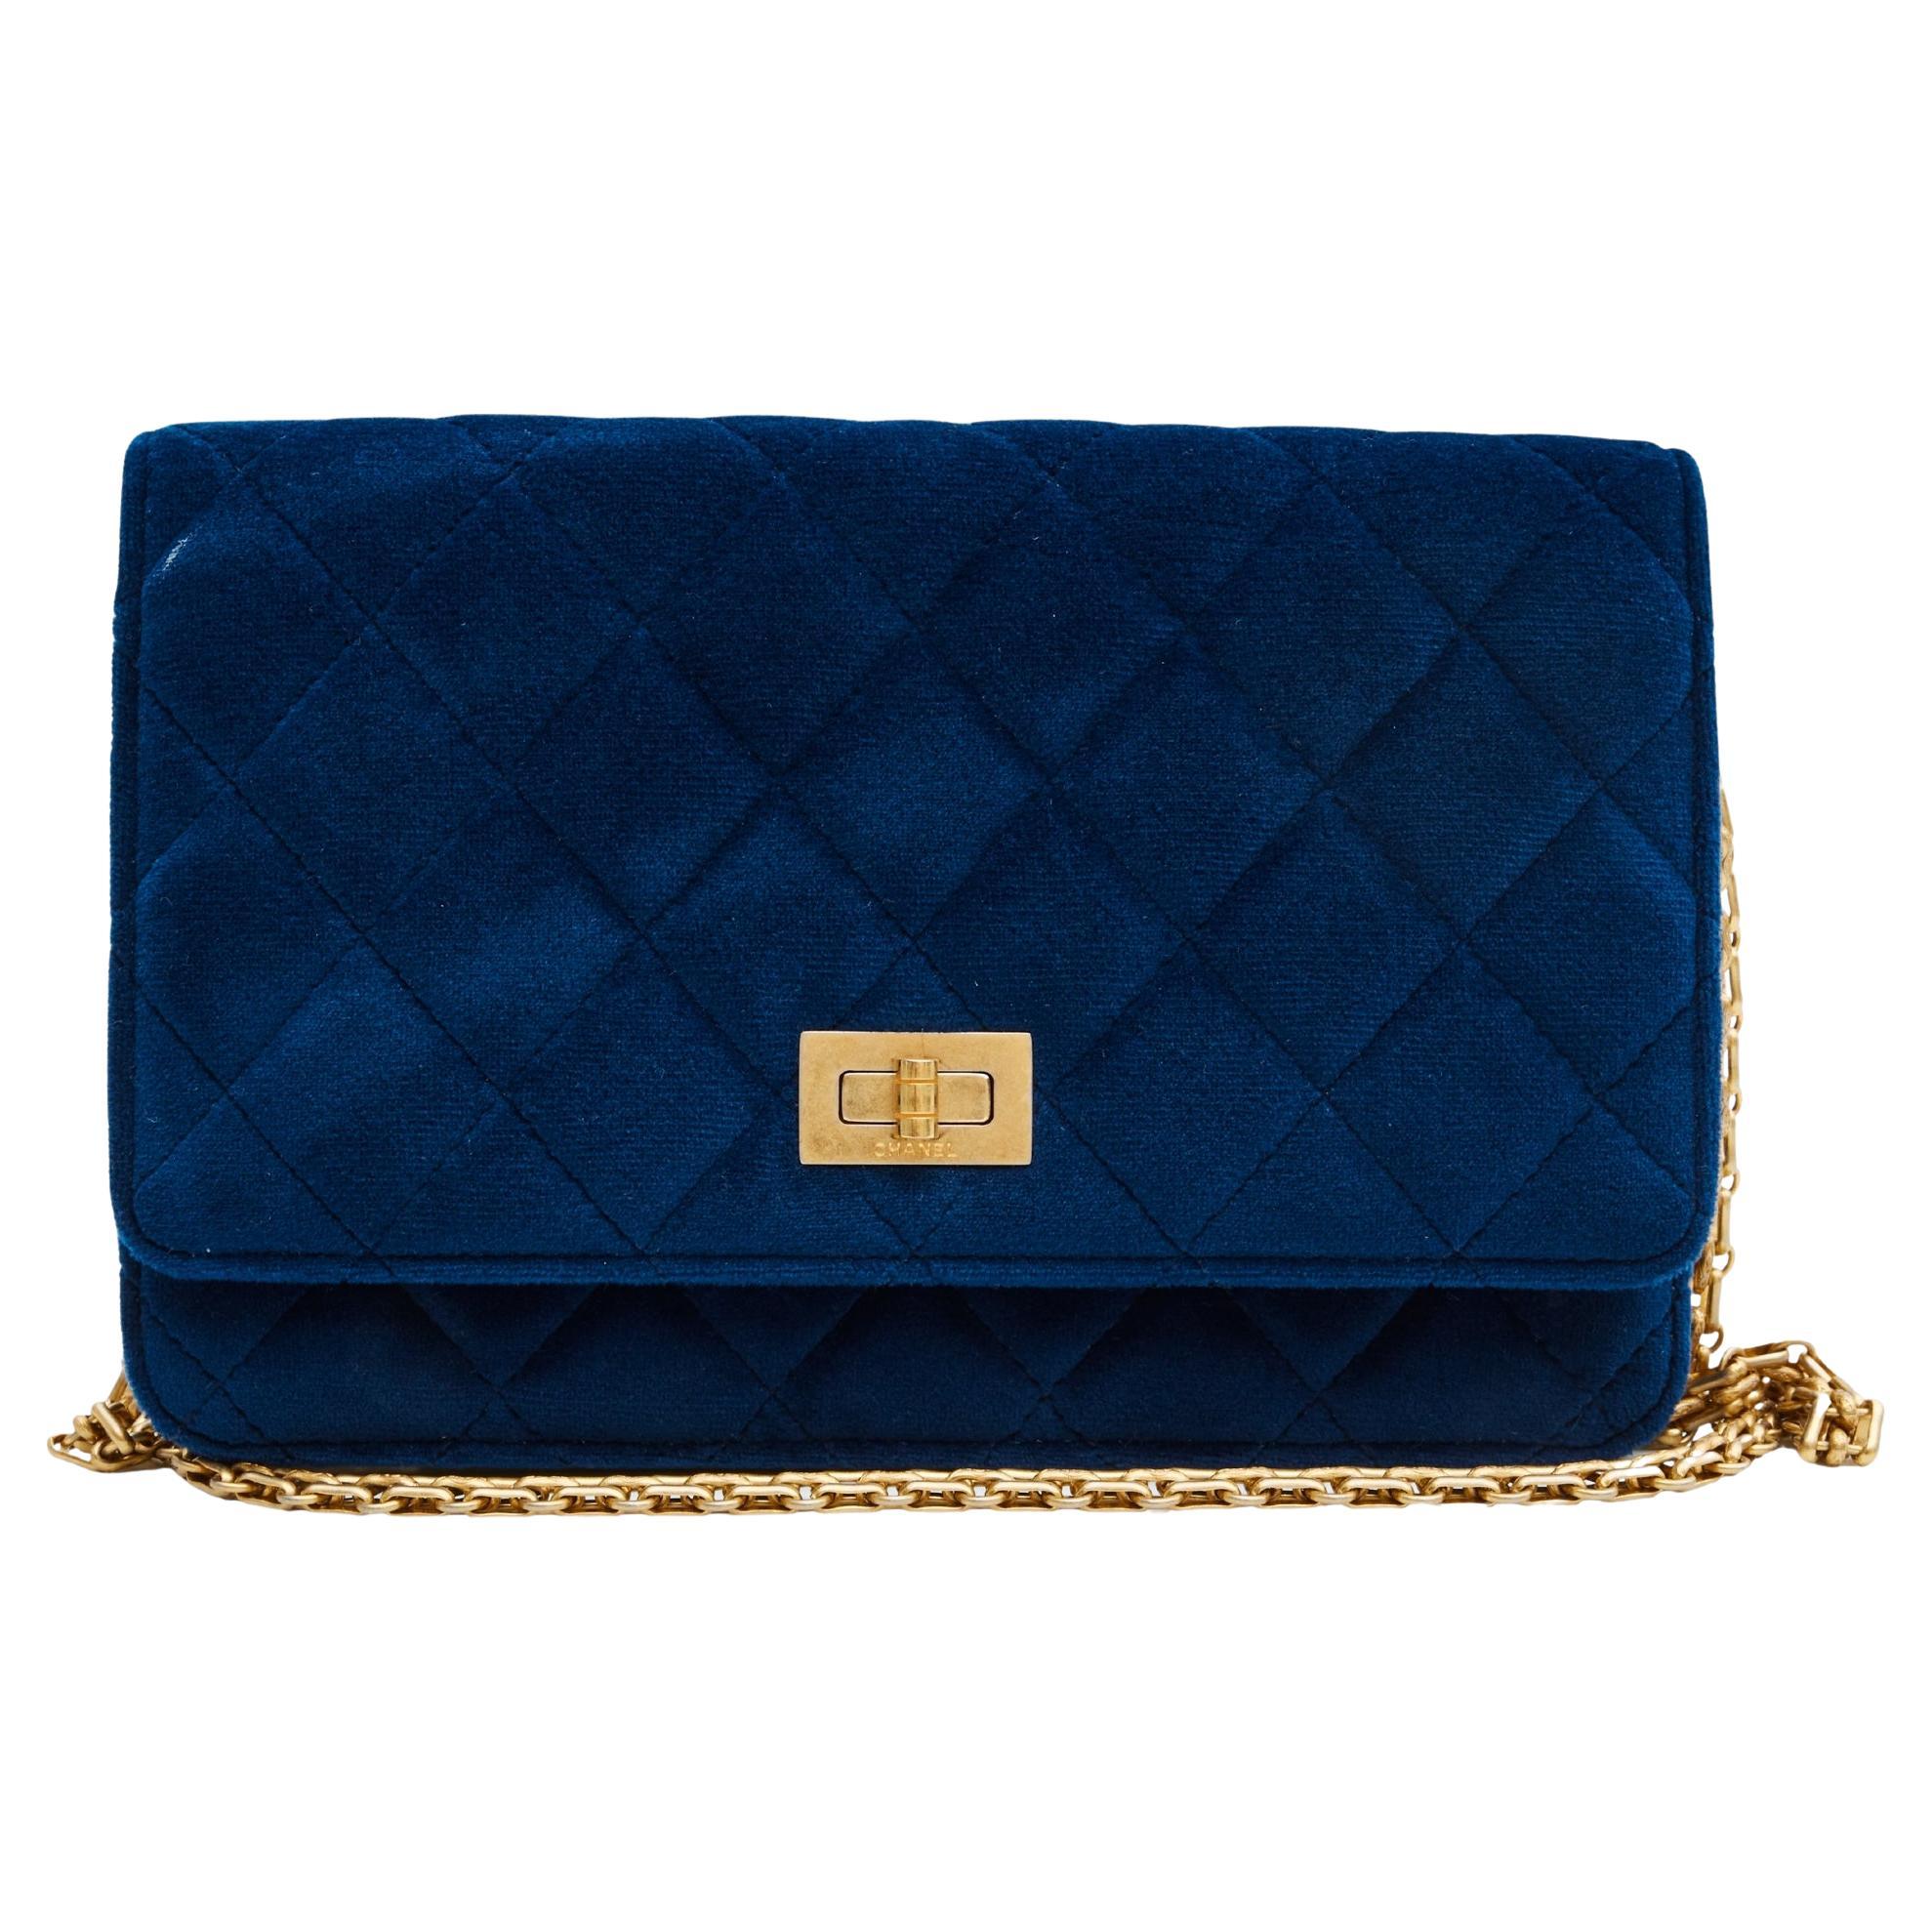 Chanel Quilted Velvet Blue 2.55 Reissue Wallet on Chain Bag 2019